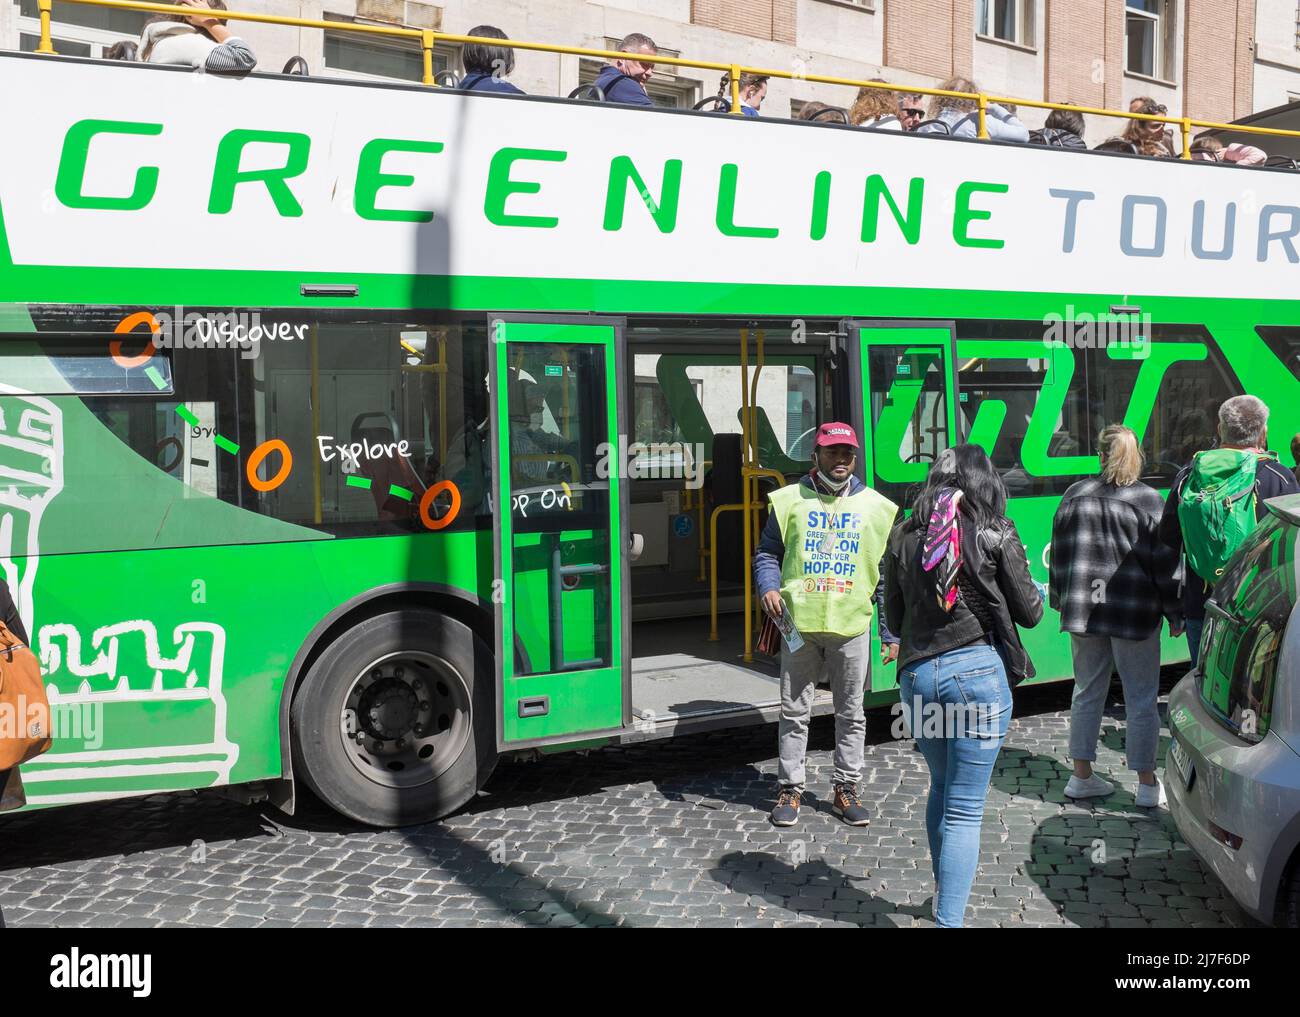 Greenline Bus Tours Rome Italy Stock Photo